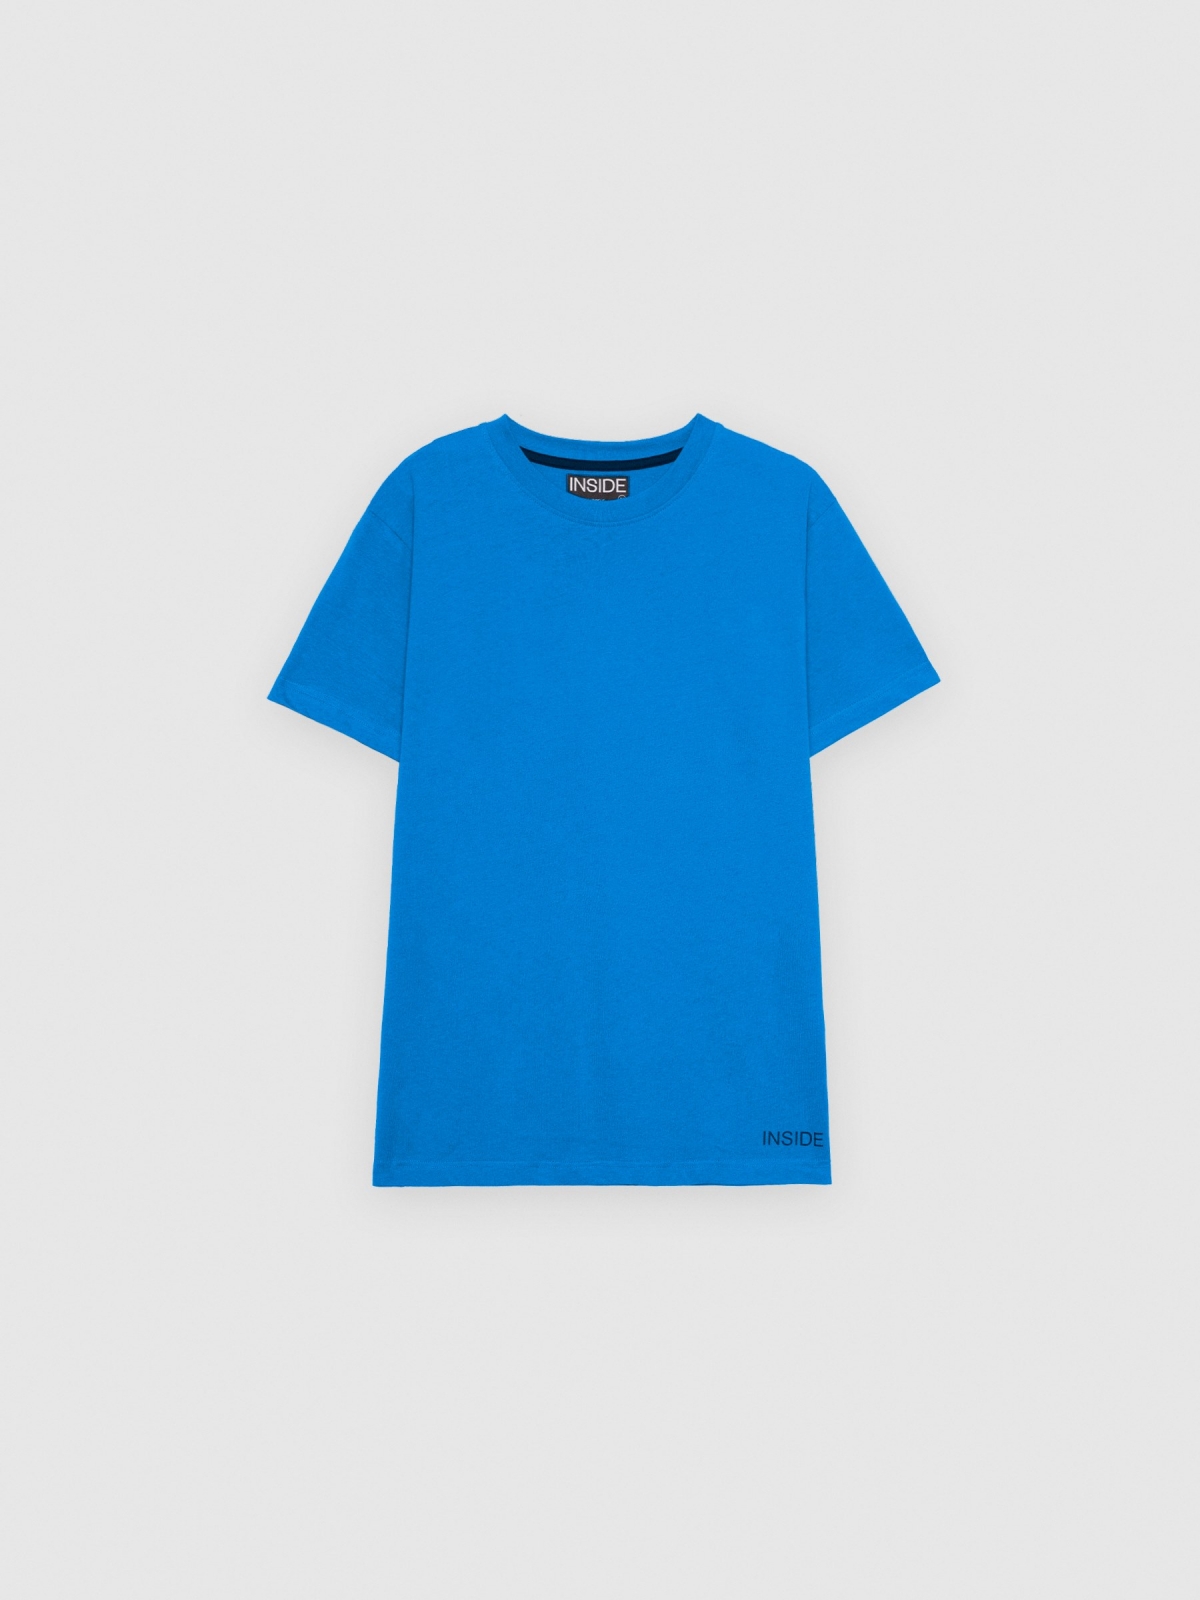  Camiseta básica manga corta azul ducados